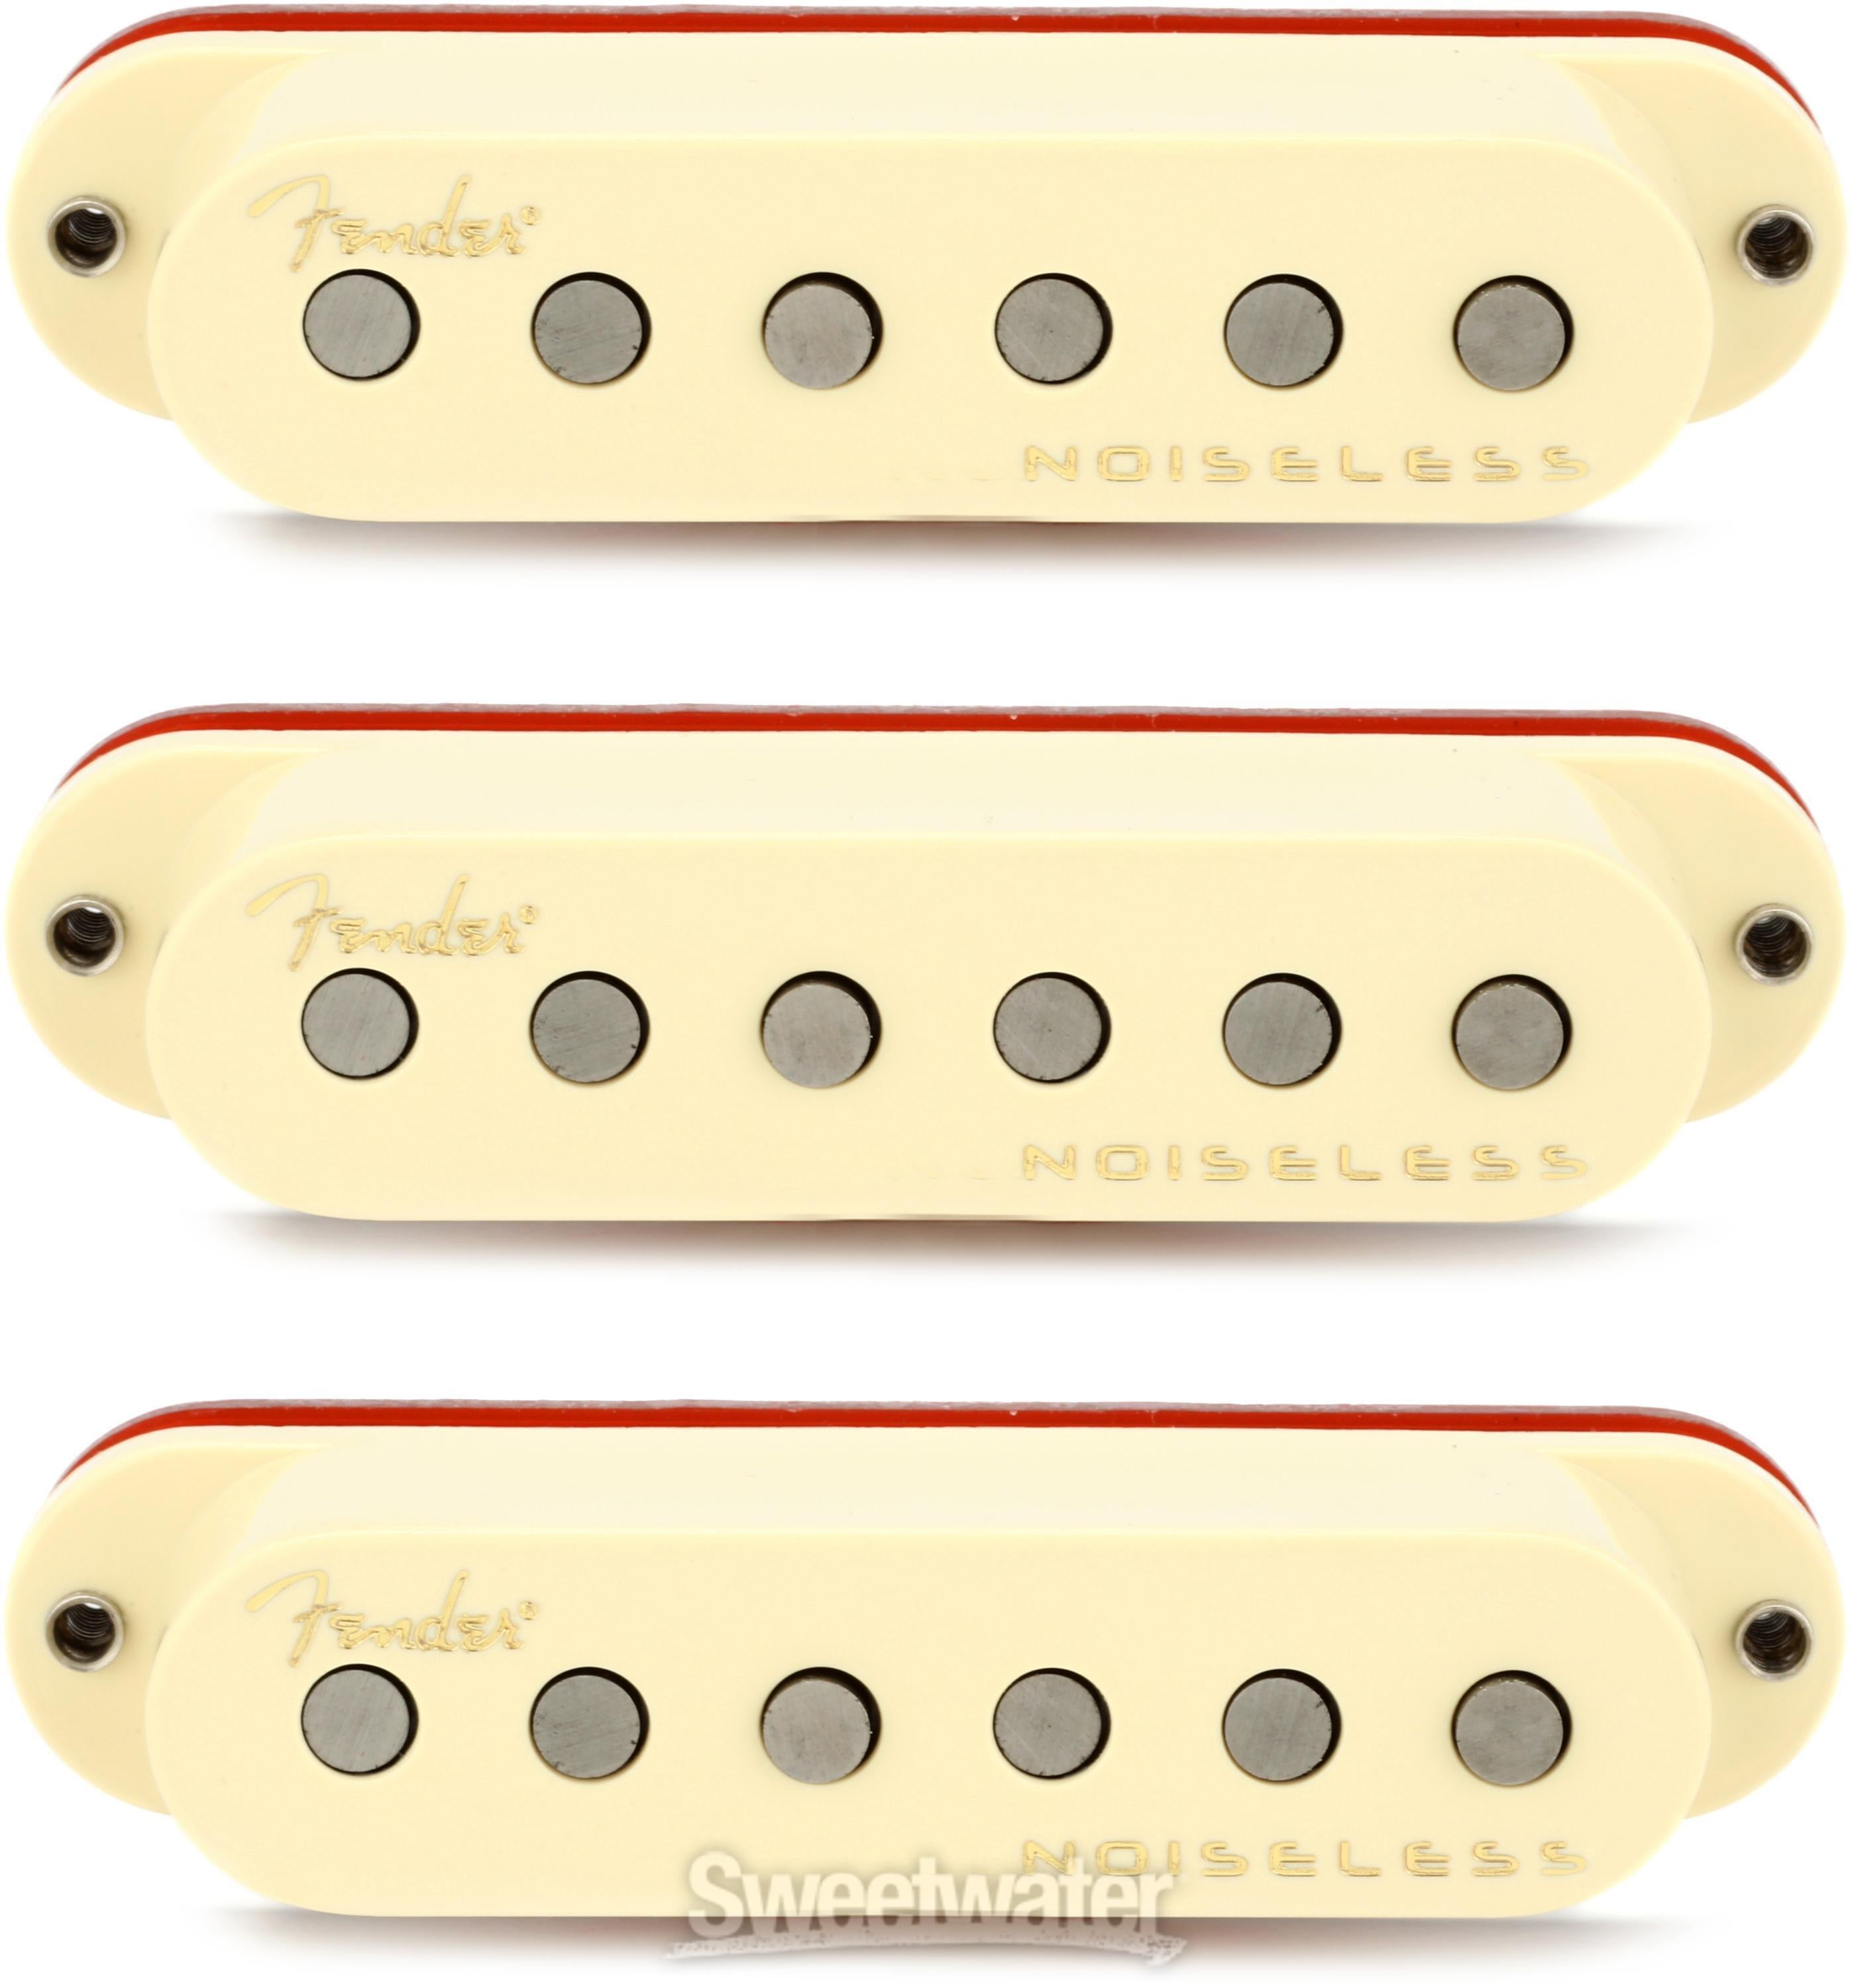 Fender Ultra Noiseless Hot Passive Stratocaster 3-piece Pickup Set - Cream